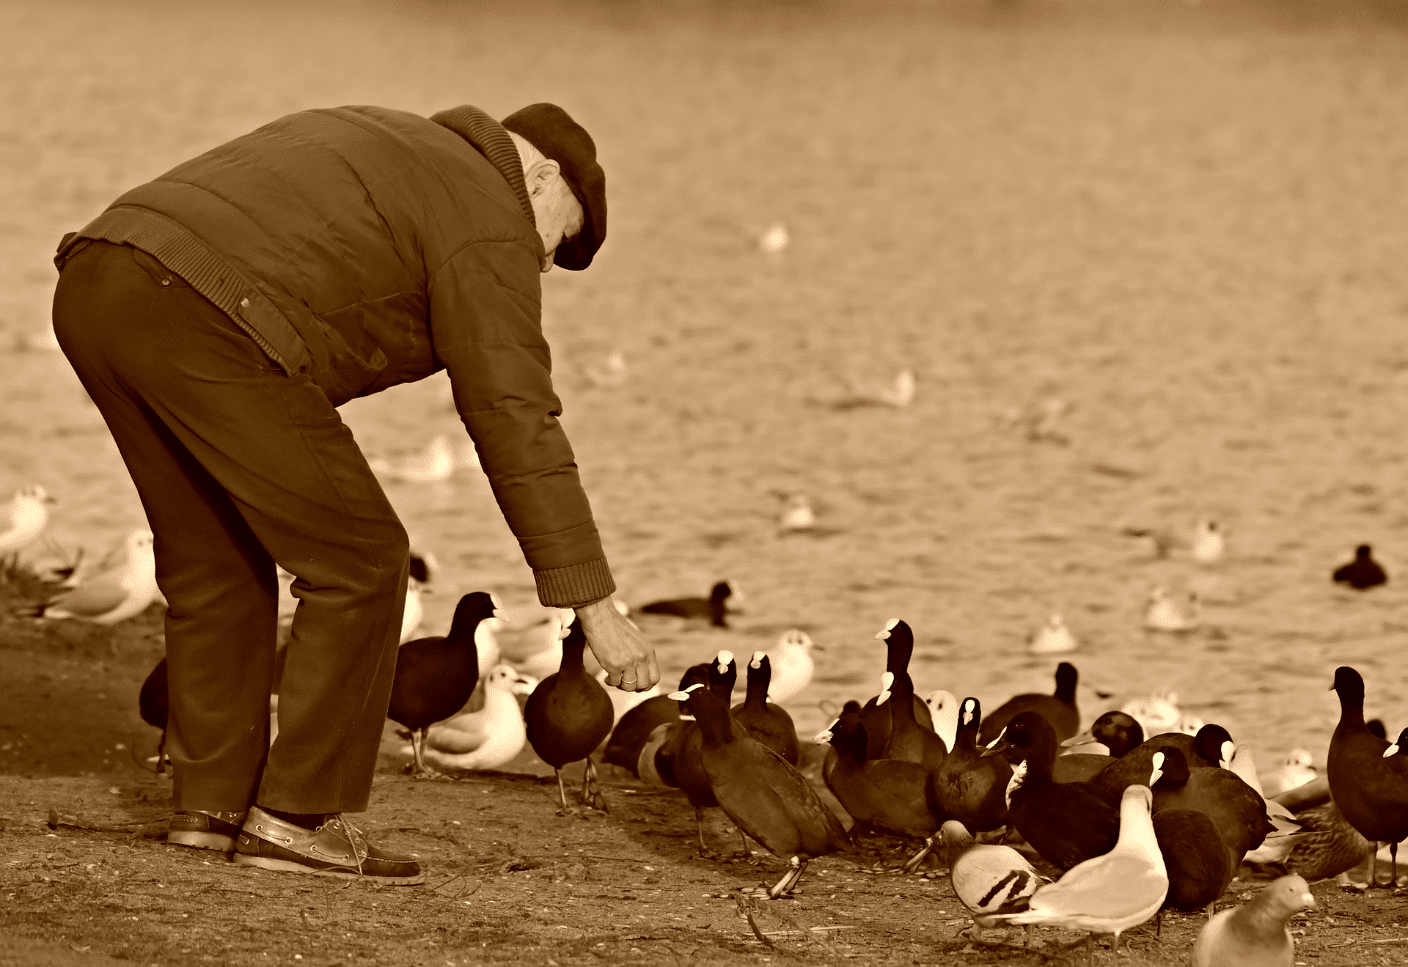 An elderly man bending over and feeding some birds